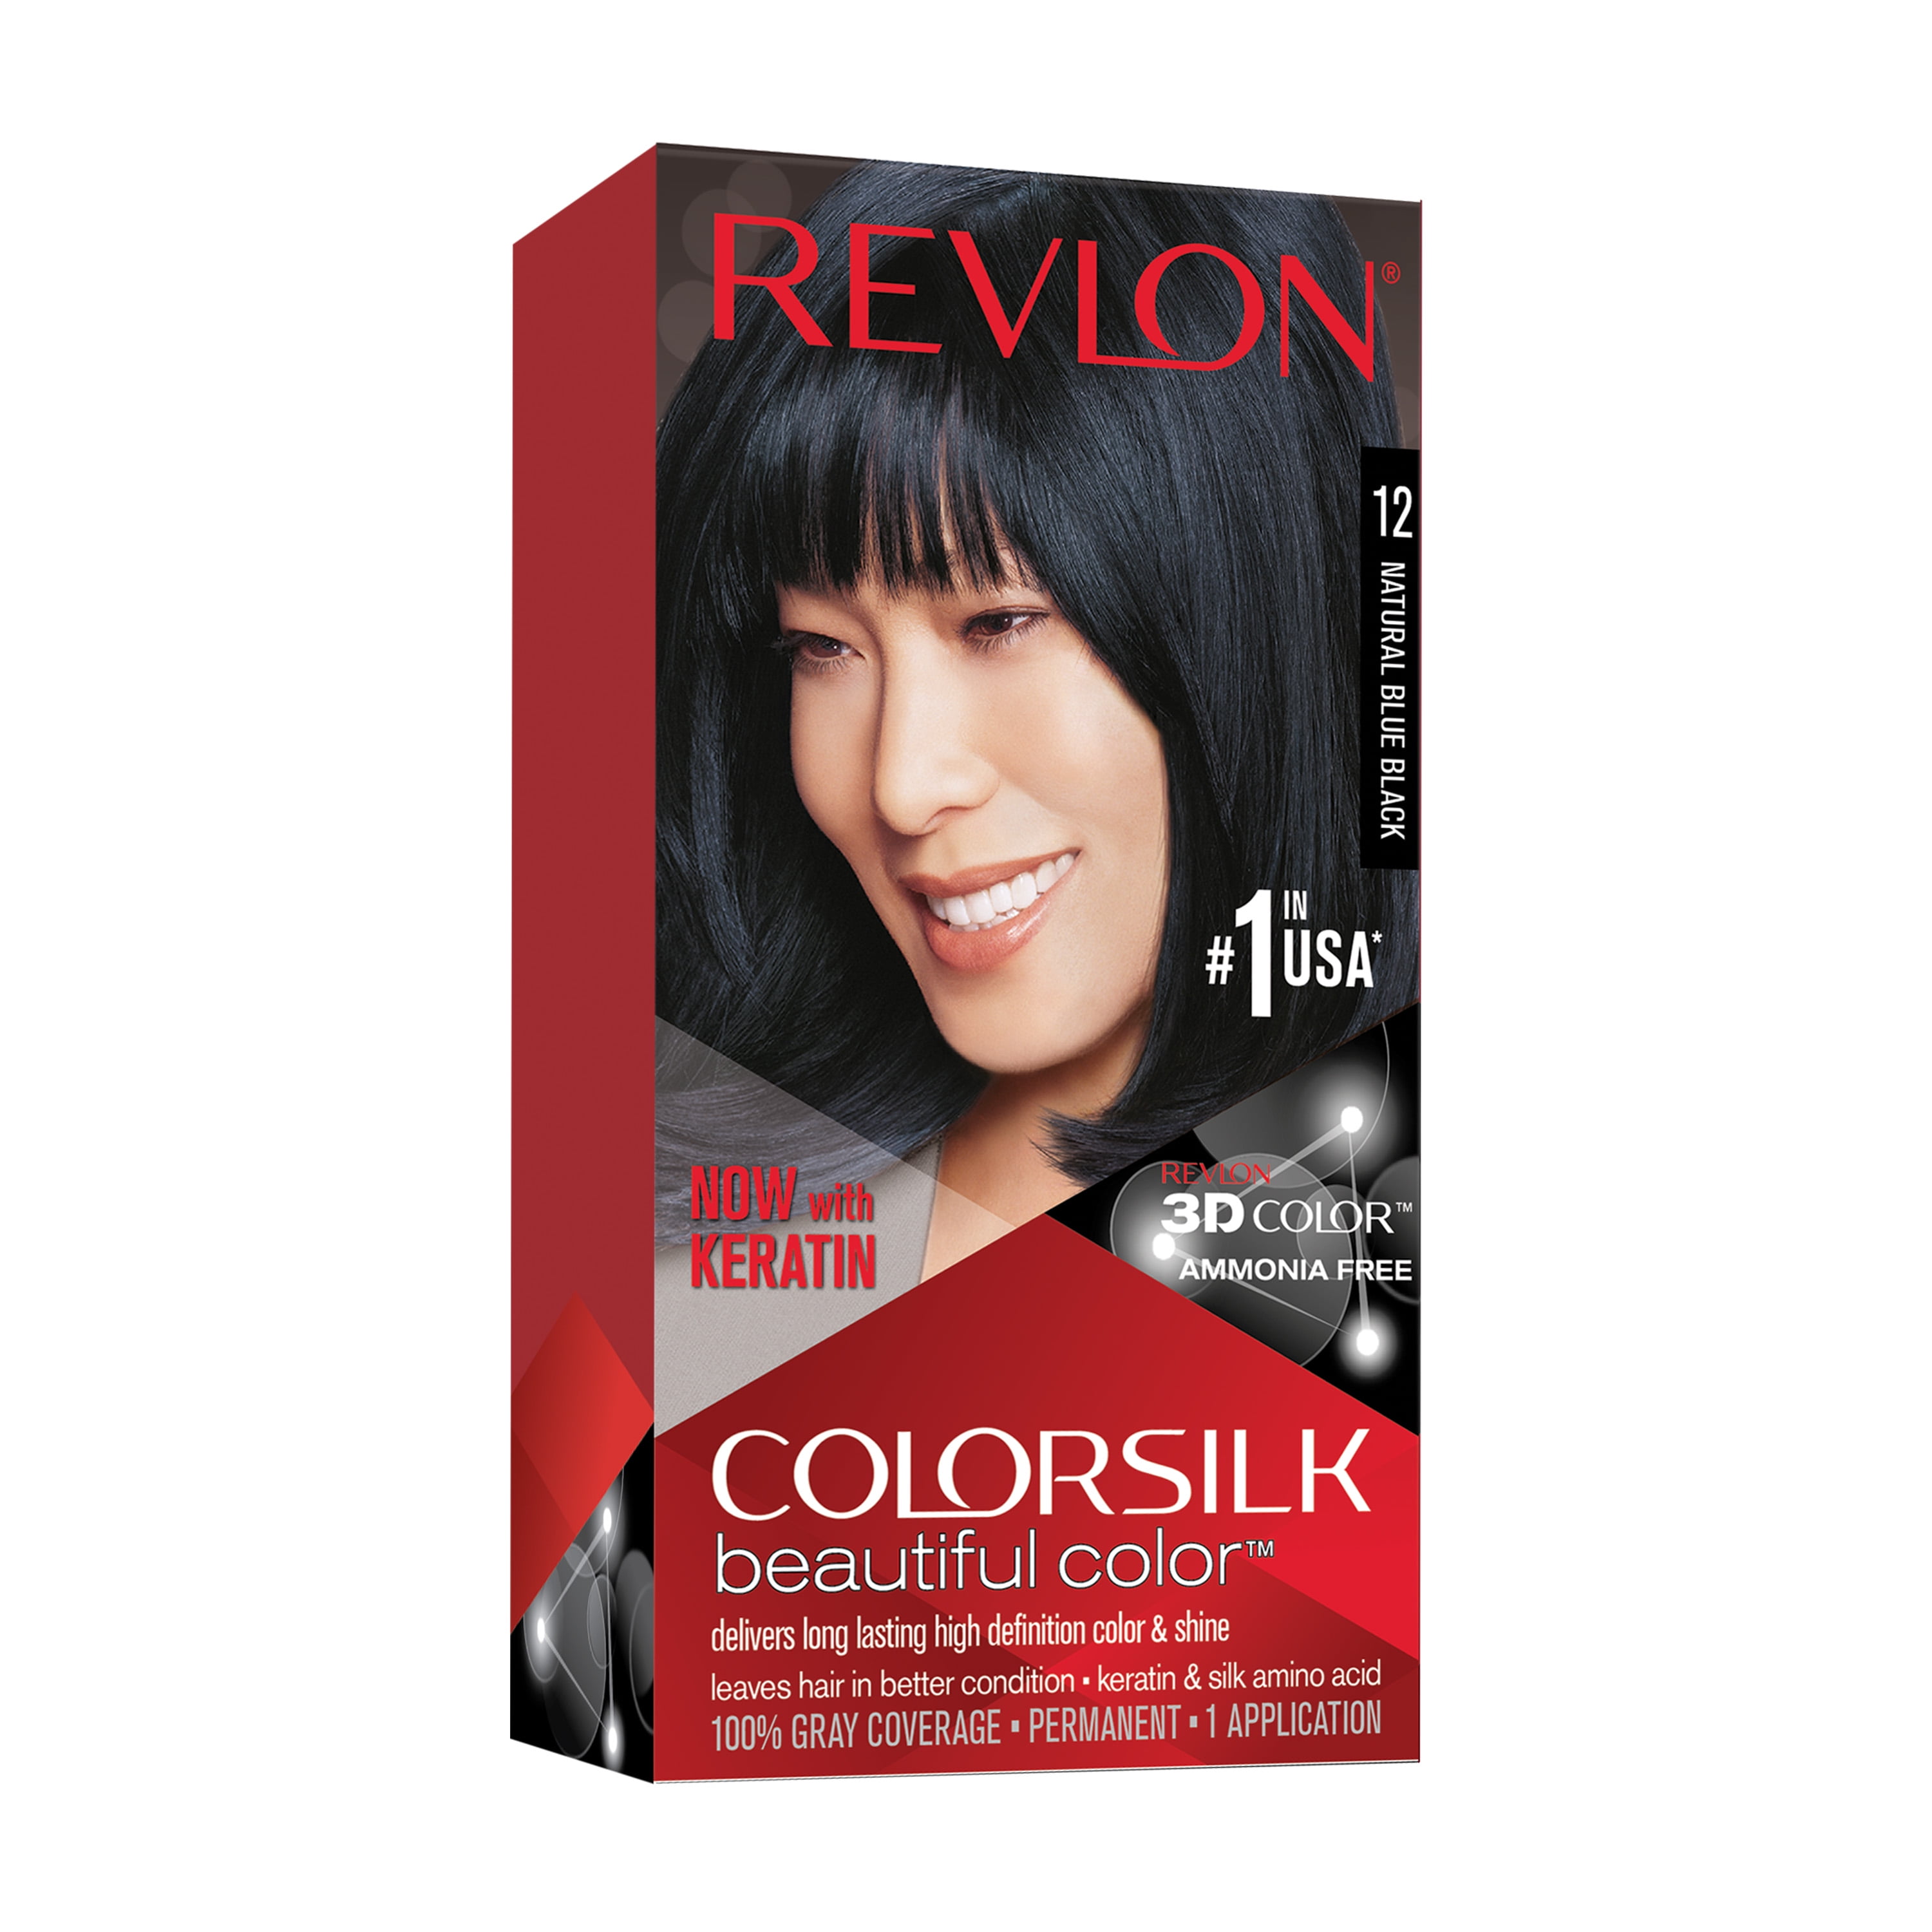 Revlon Colorsilk Beautiful Color Permanent Hair Dye, Dark Brown, At-Home  Full Coverage Application Kit, 12 Natural Blue Black, 1 count 